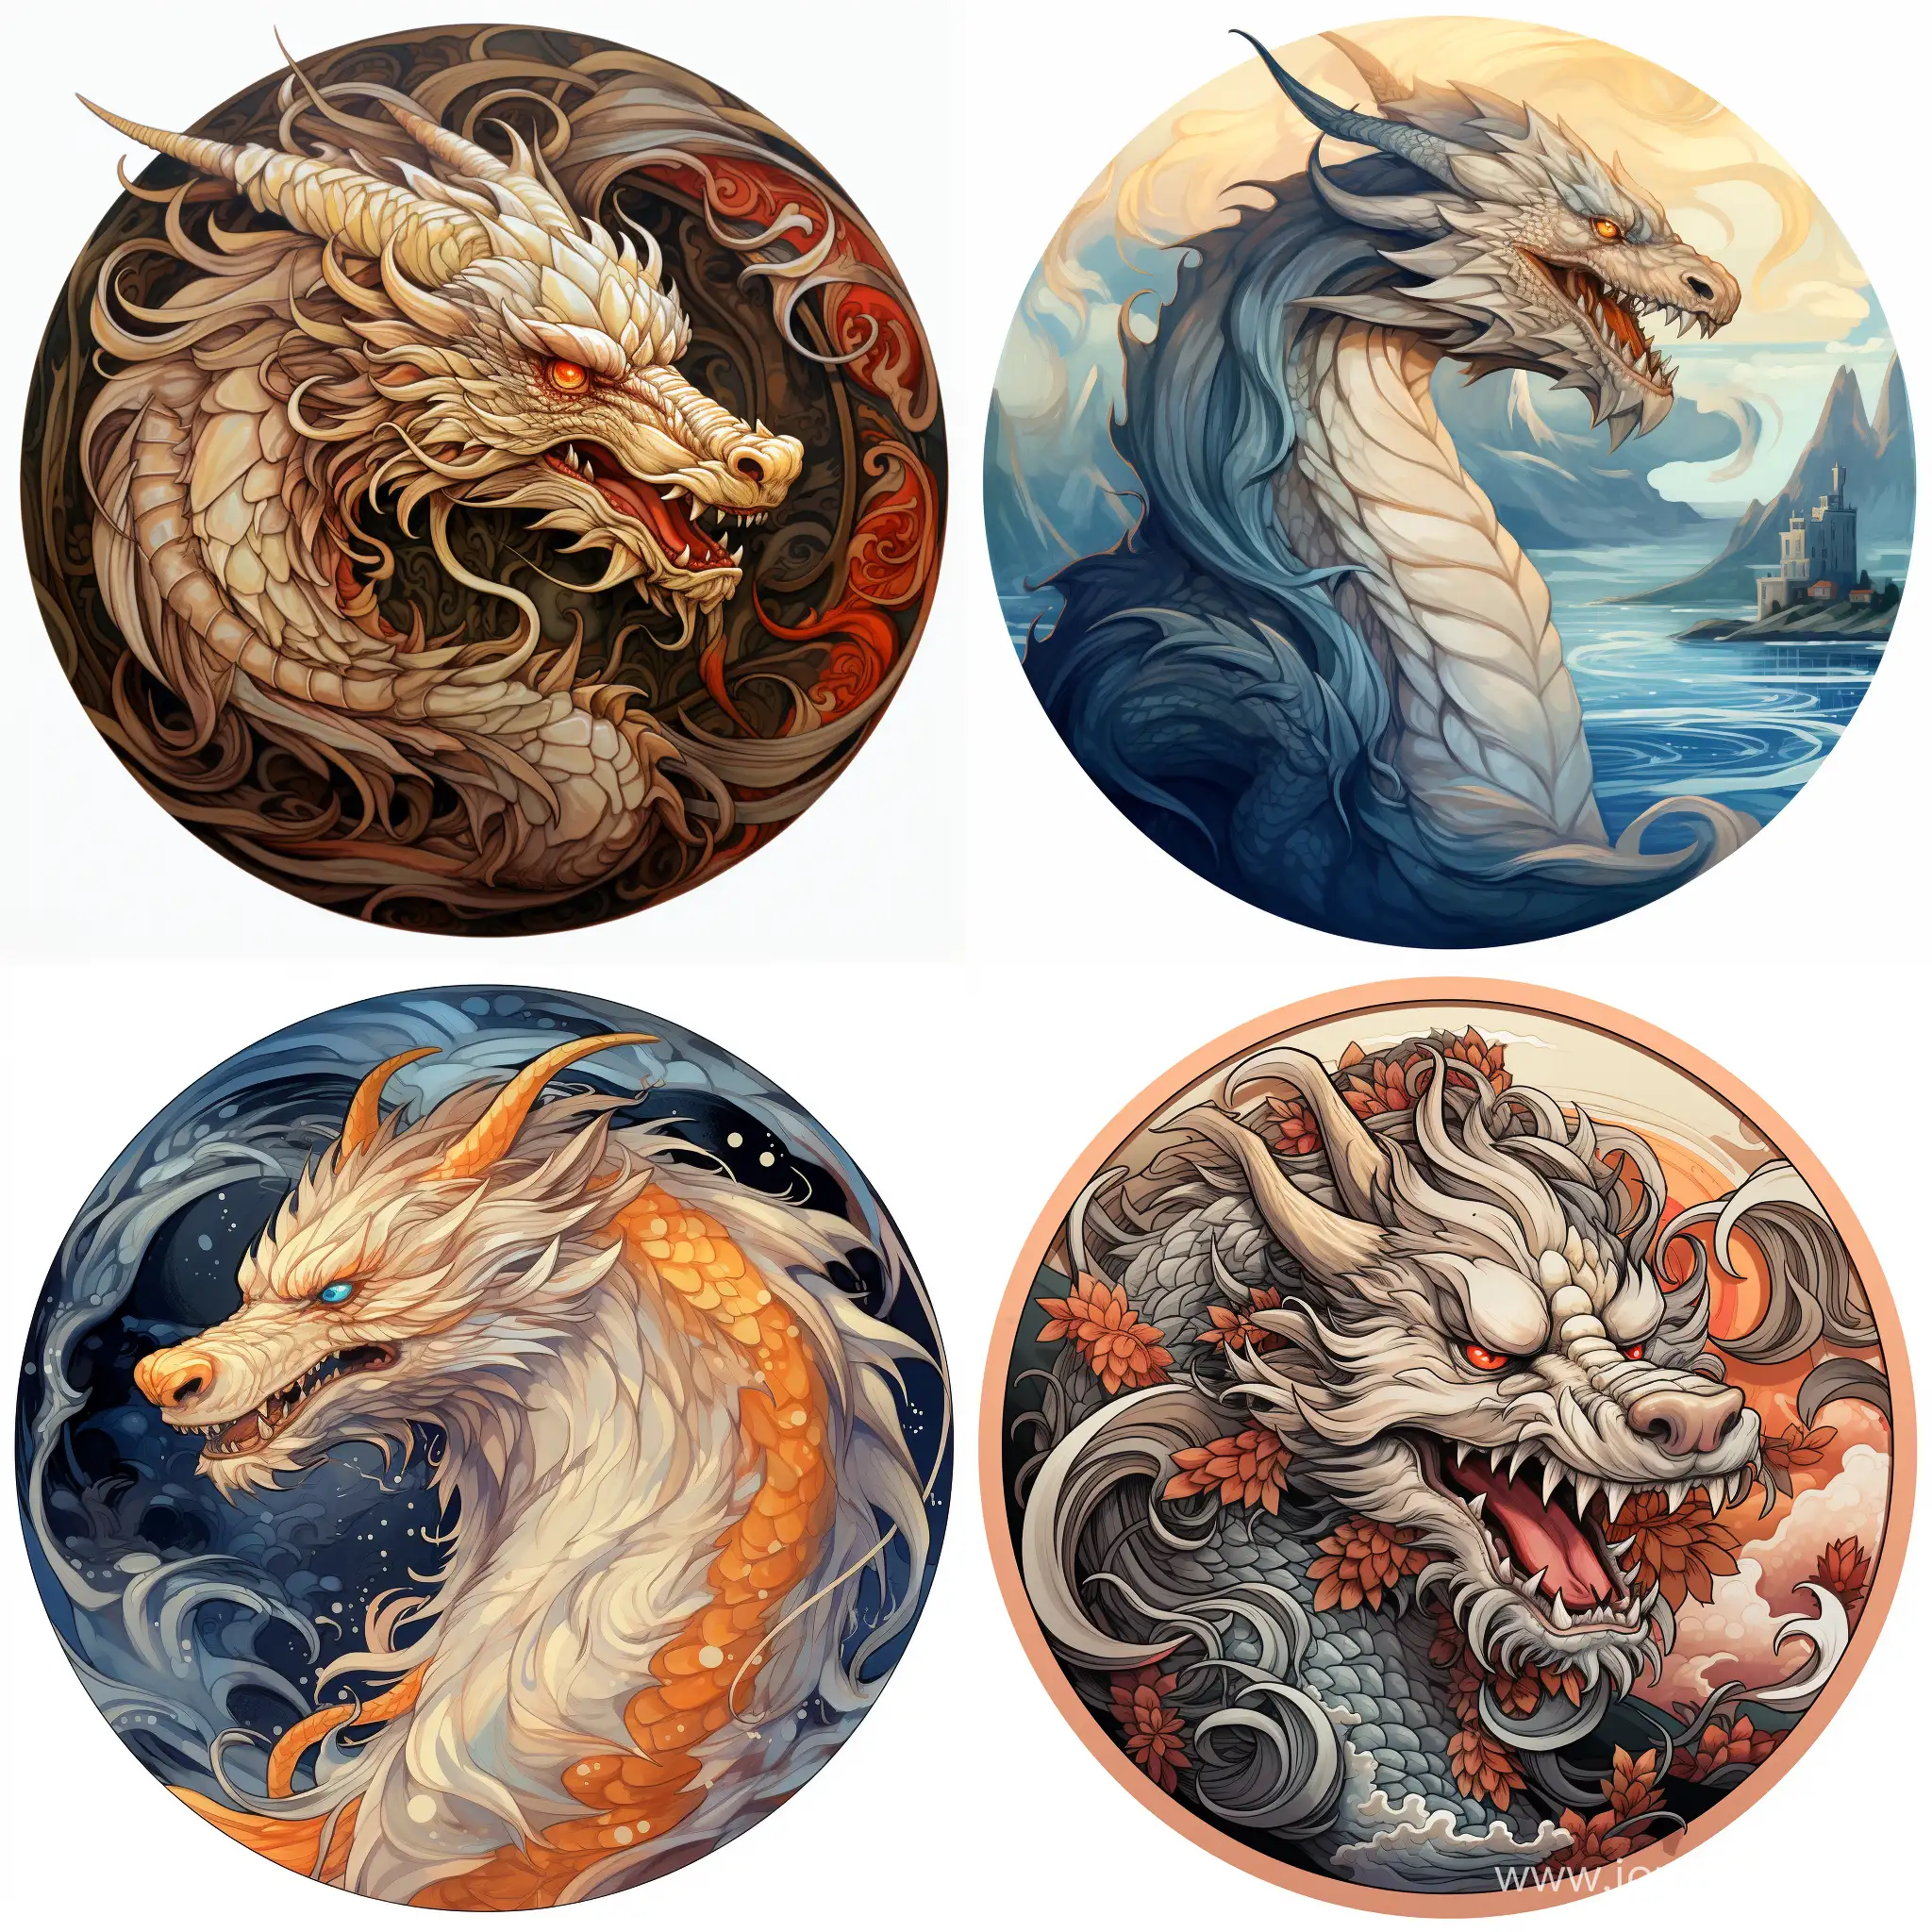 Circular-Dragon-Art-Unique-Fantasy-Creature-in-a-11-Aspect-Ratio